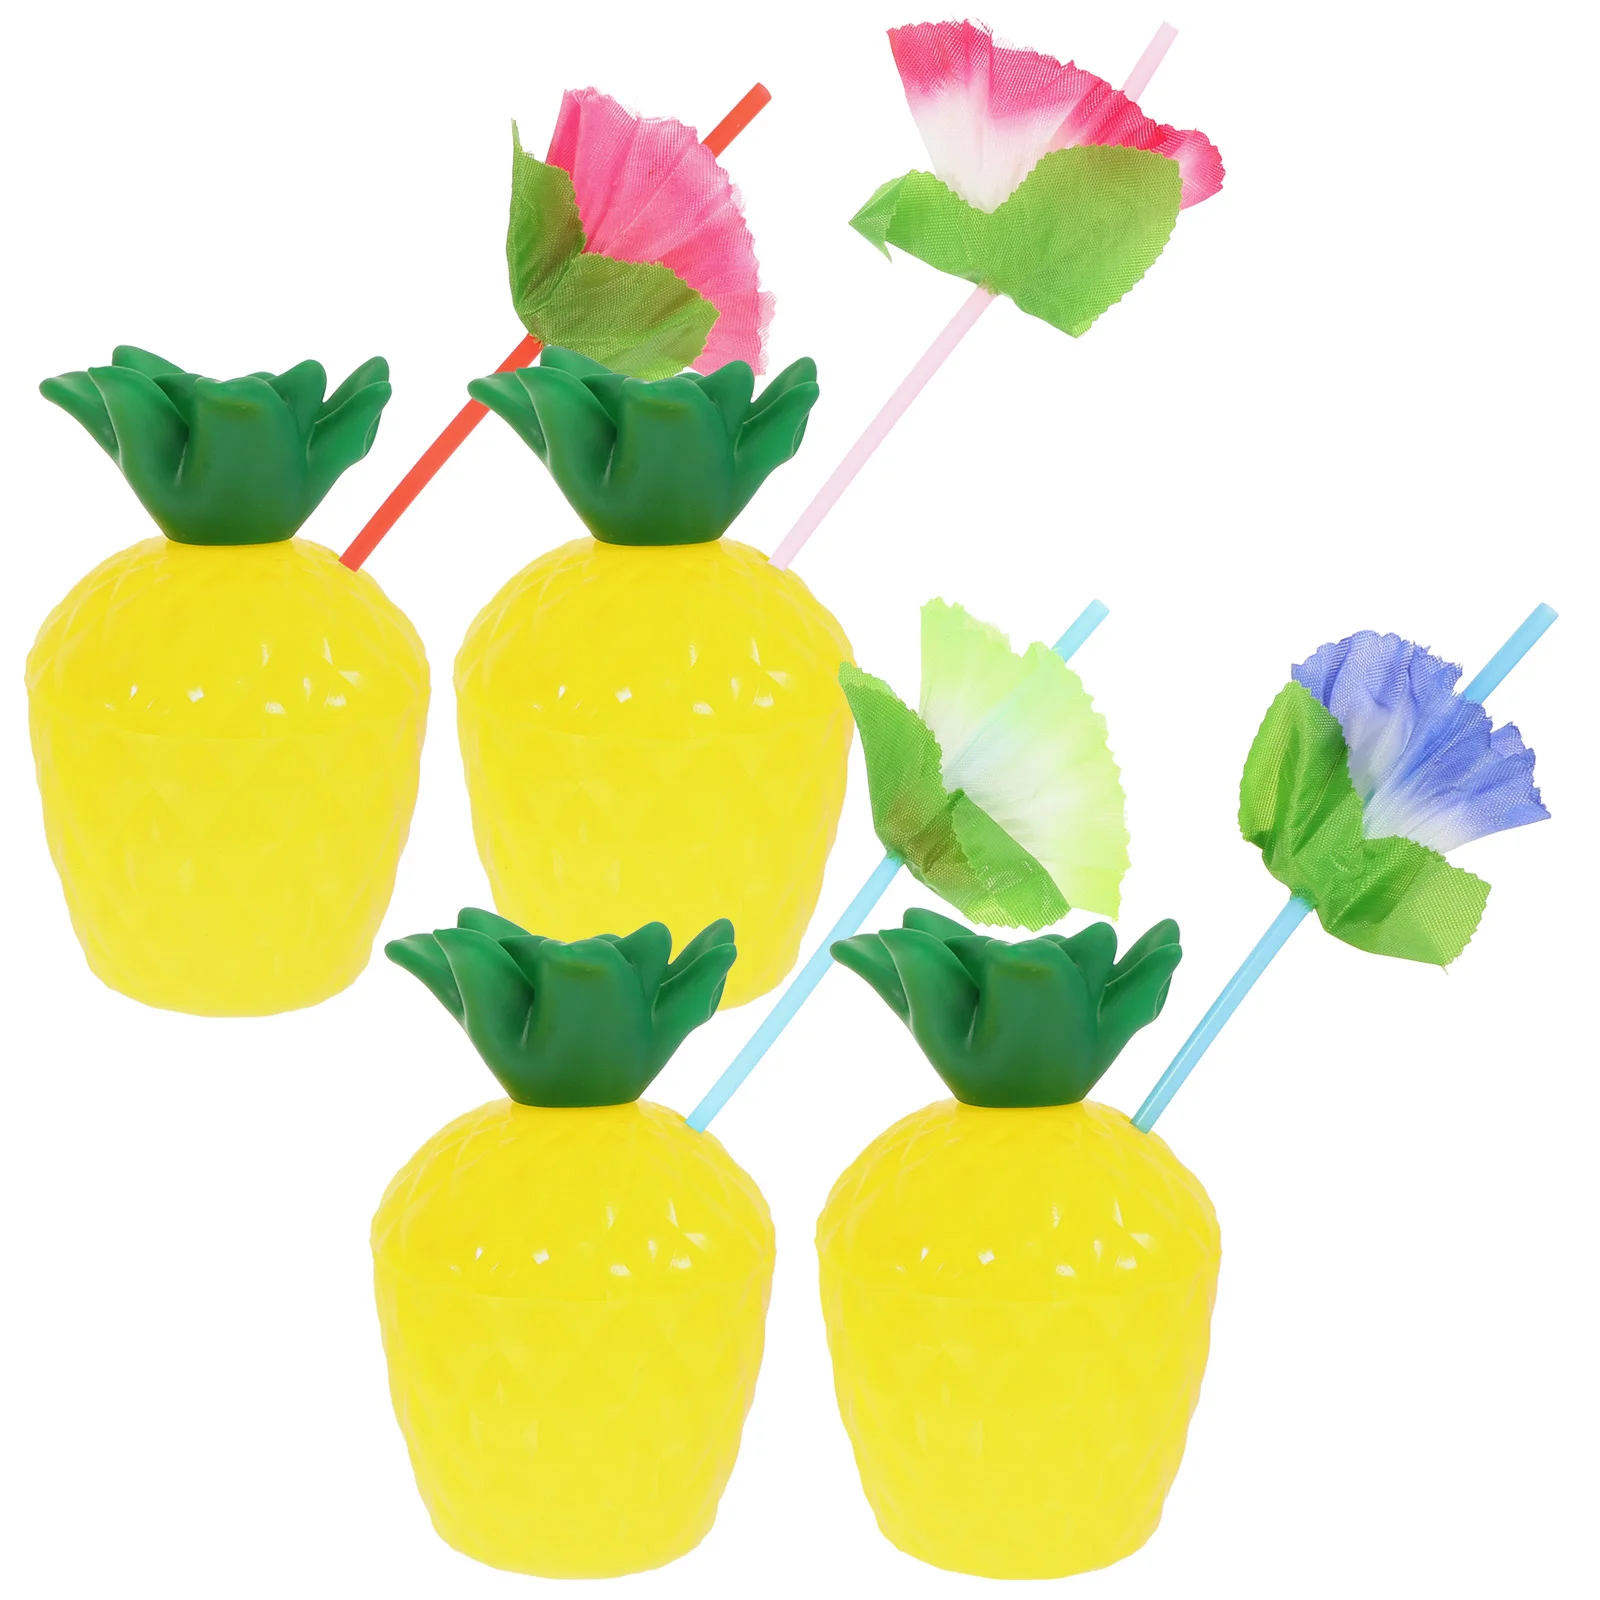 

4 Pcs Ornaments Pineapple Cups Hawaiian Party Luau Beach Drinks Banquet Lids Straws